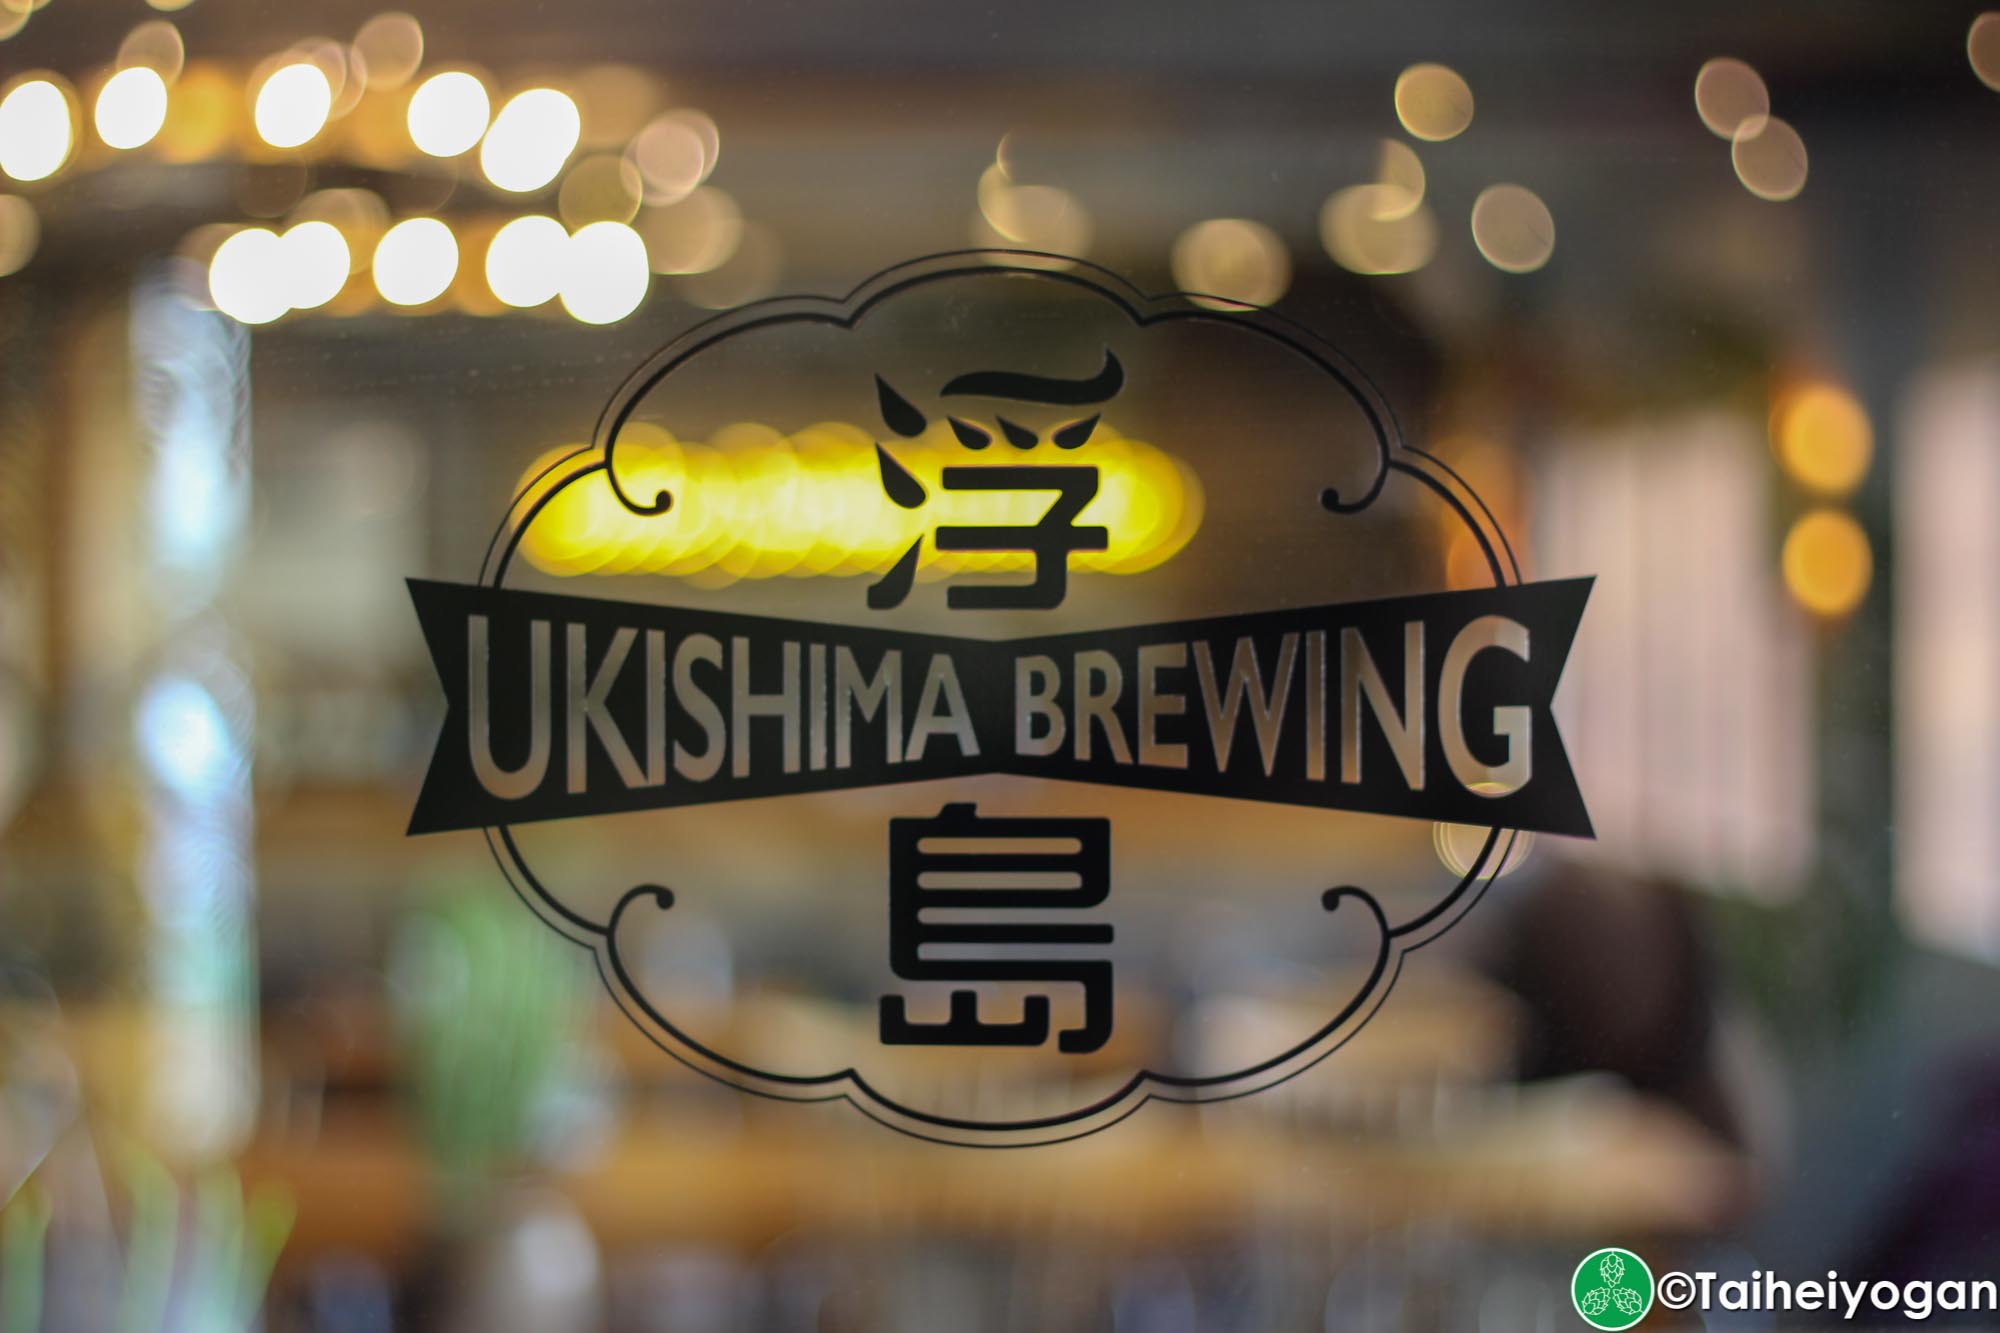 Ukishima Brewery Taproom - Interior - Decorations